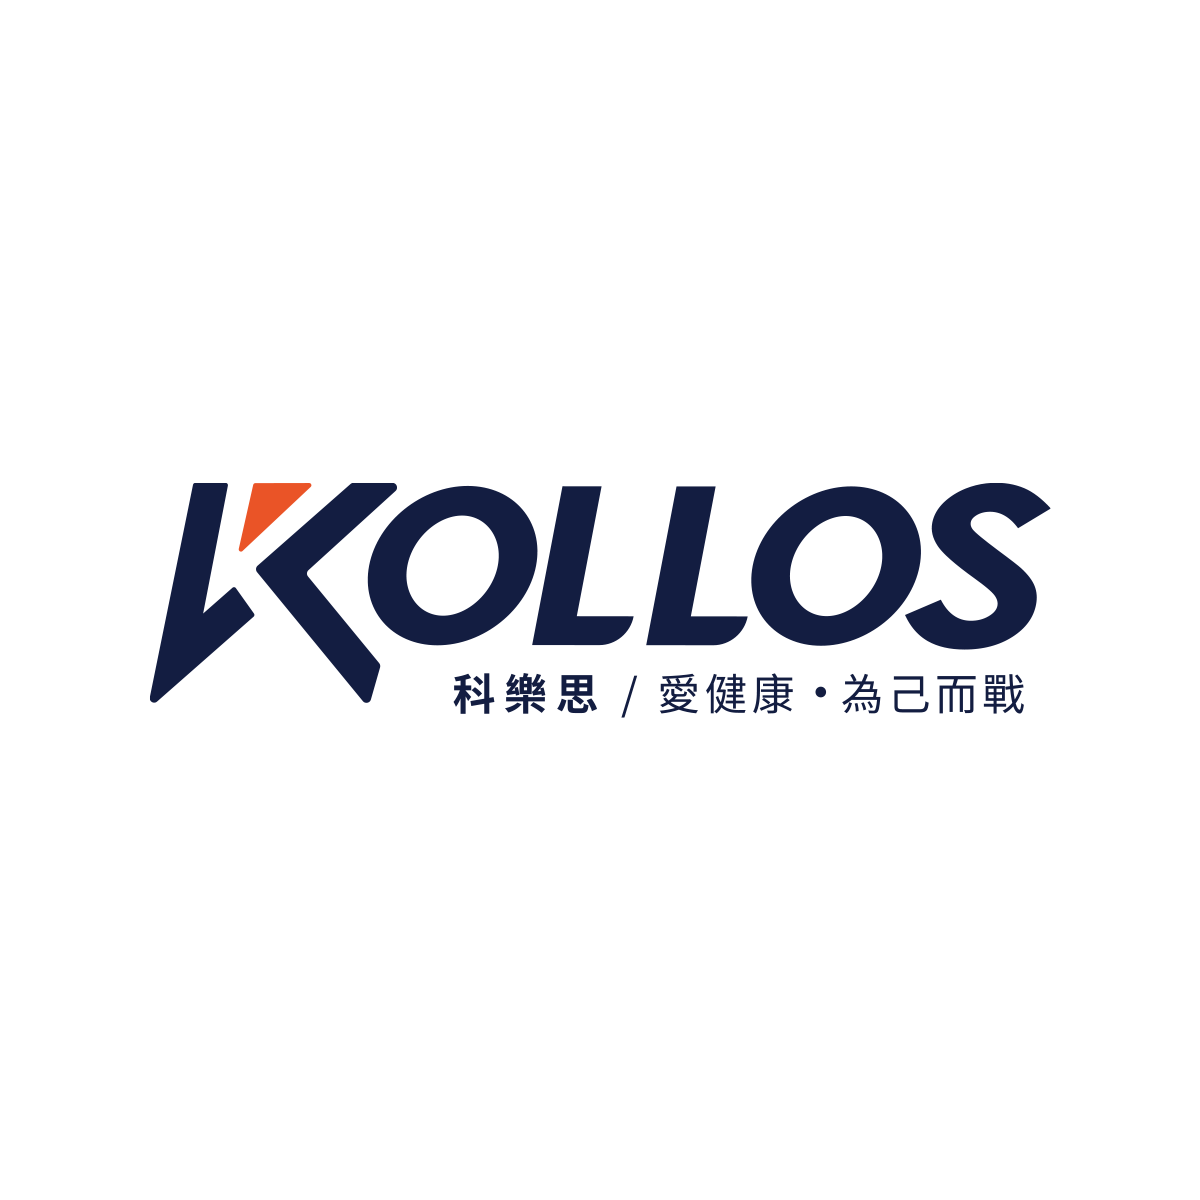 KOLLOS logo.png